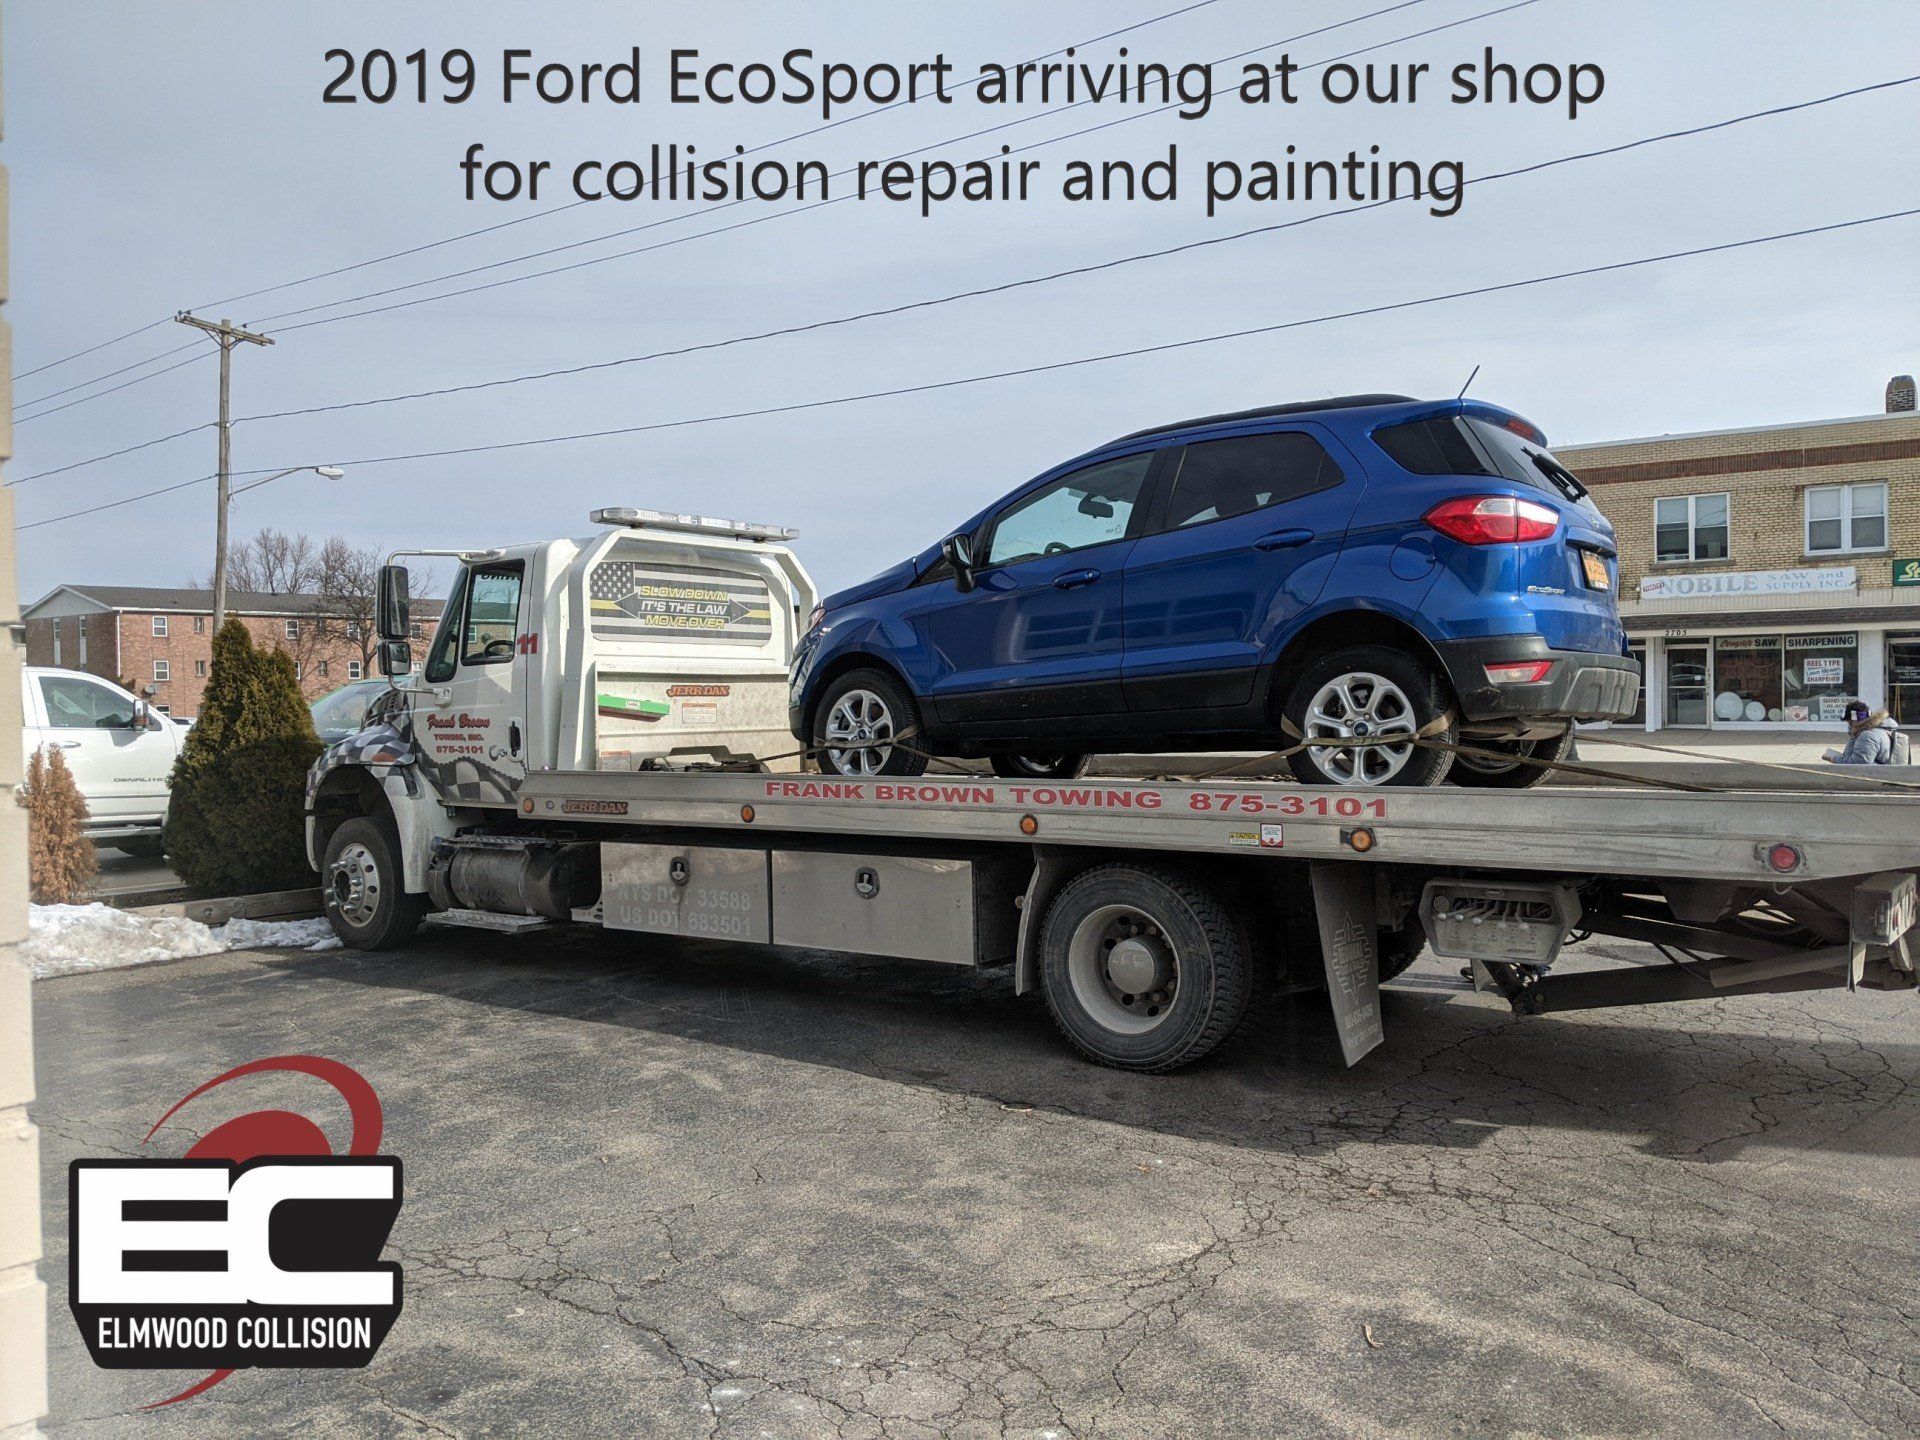 Ford EcoSport arrives on Flatbed at Elmwood Collision